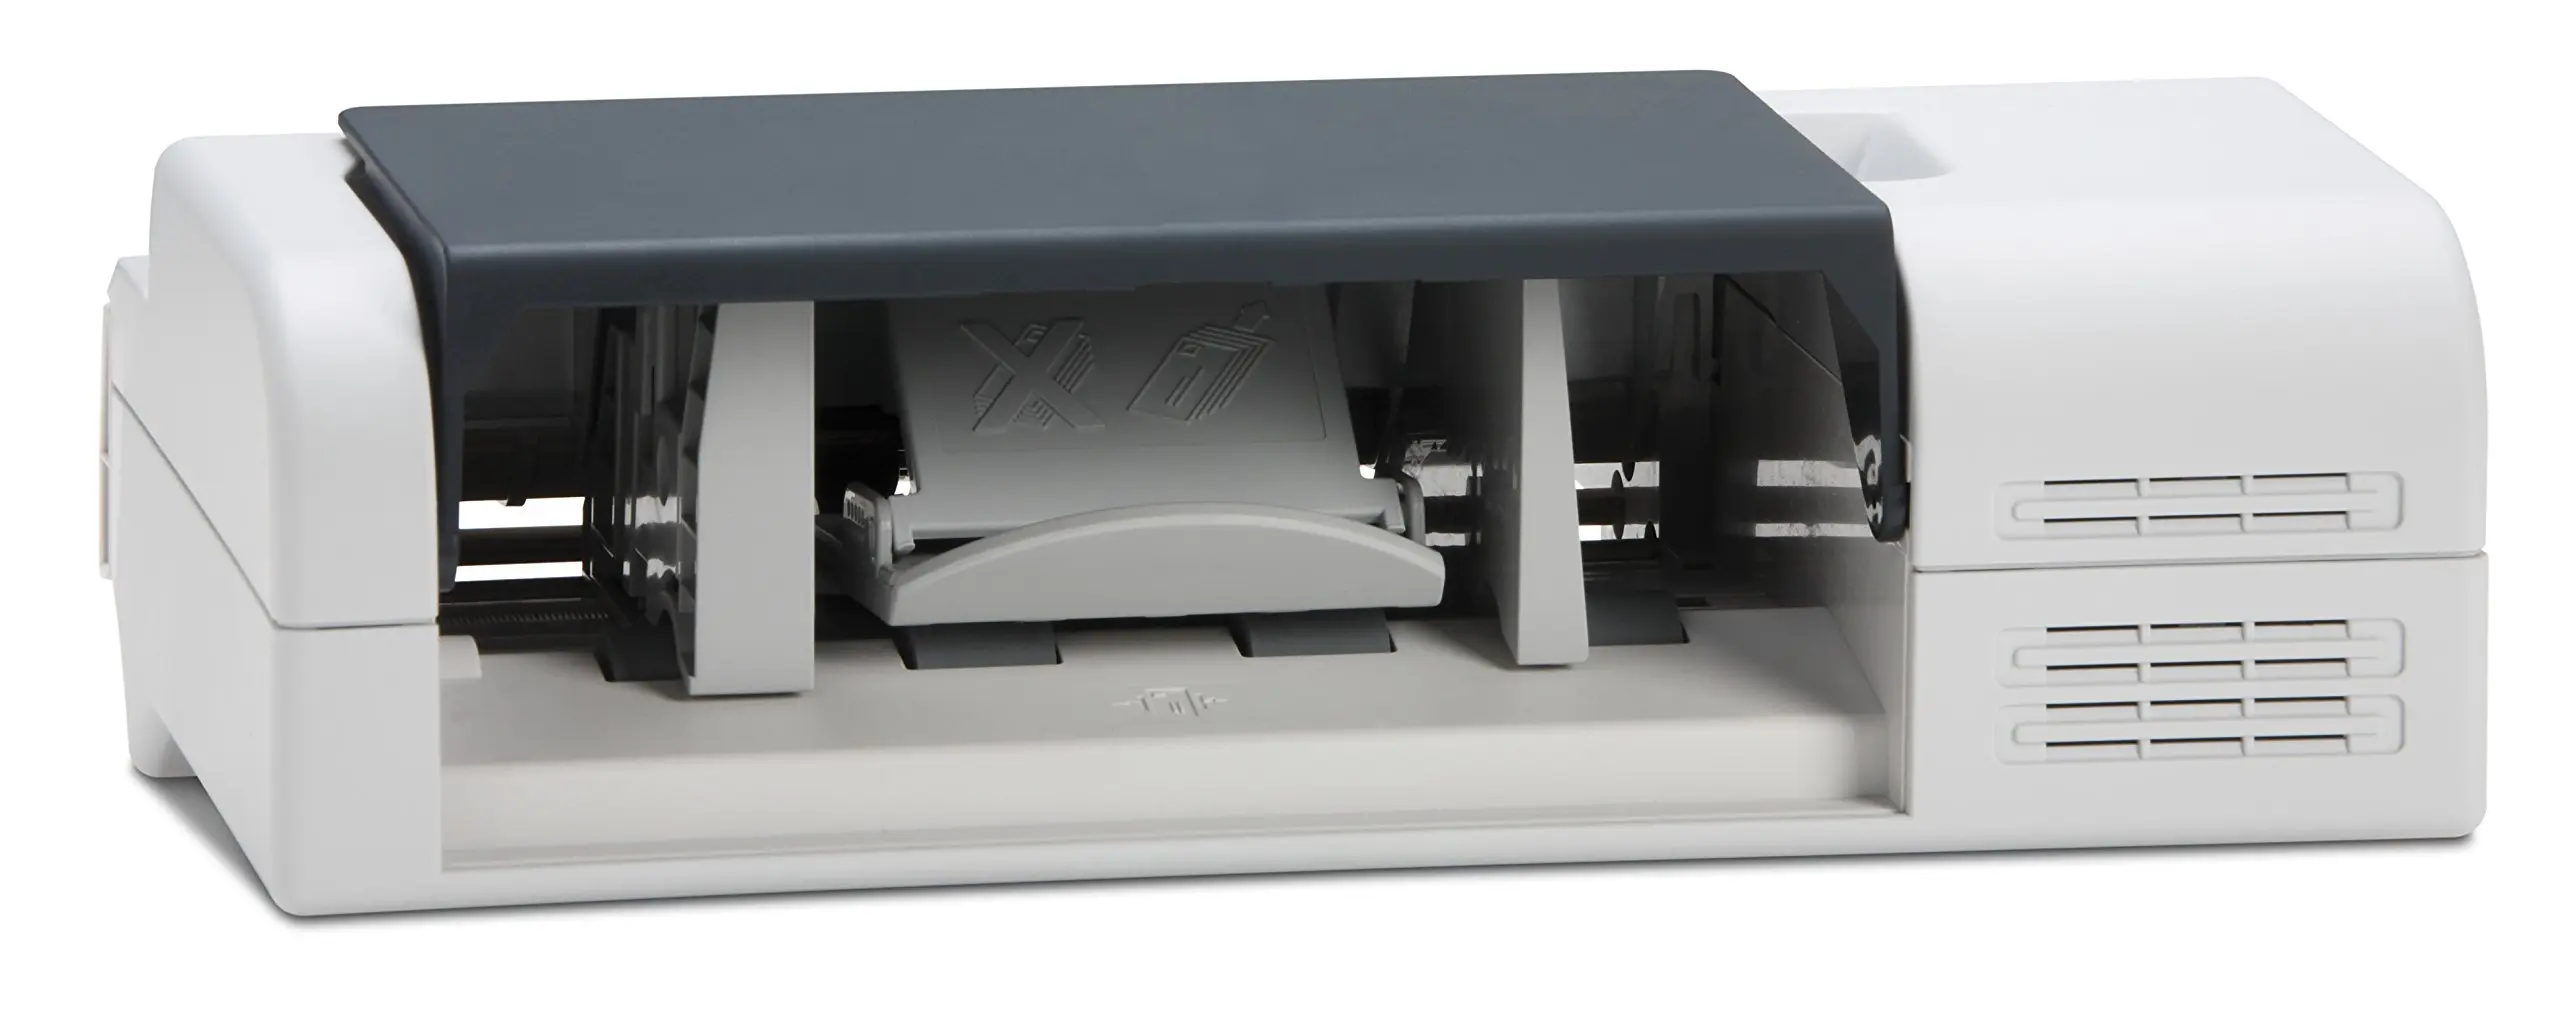 hp hewlett packard lj enterprise 600 envelope feeder specifications - How do I print double sided on HP Laserjet 600